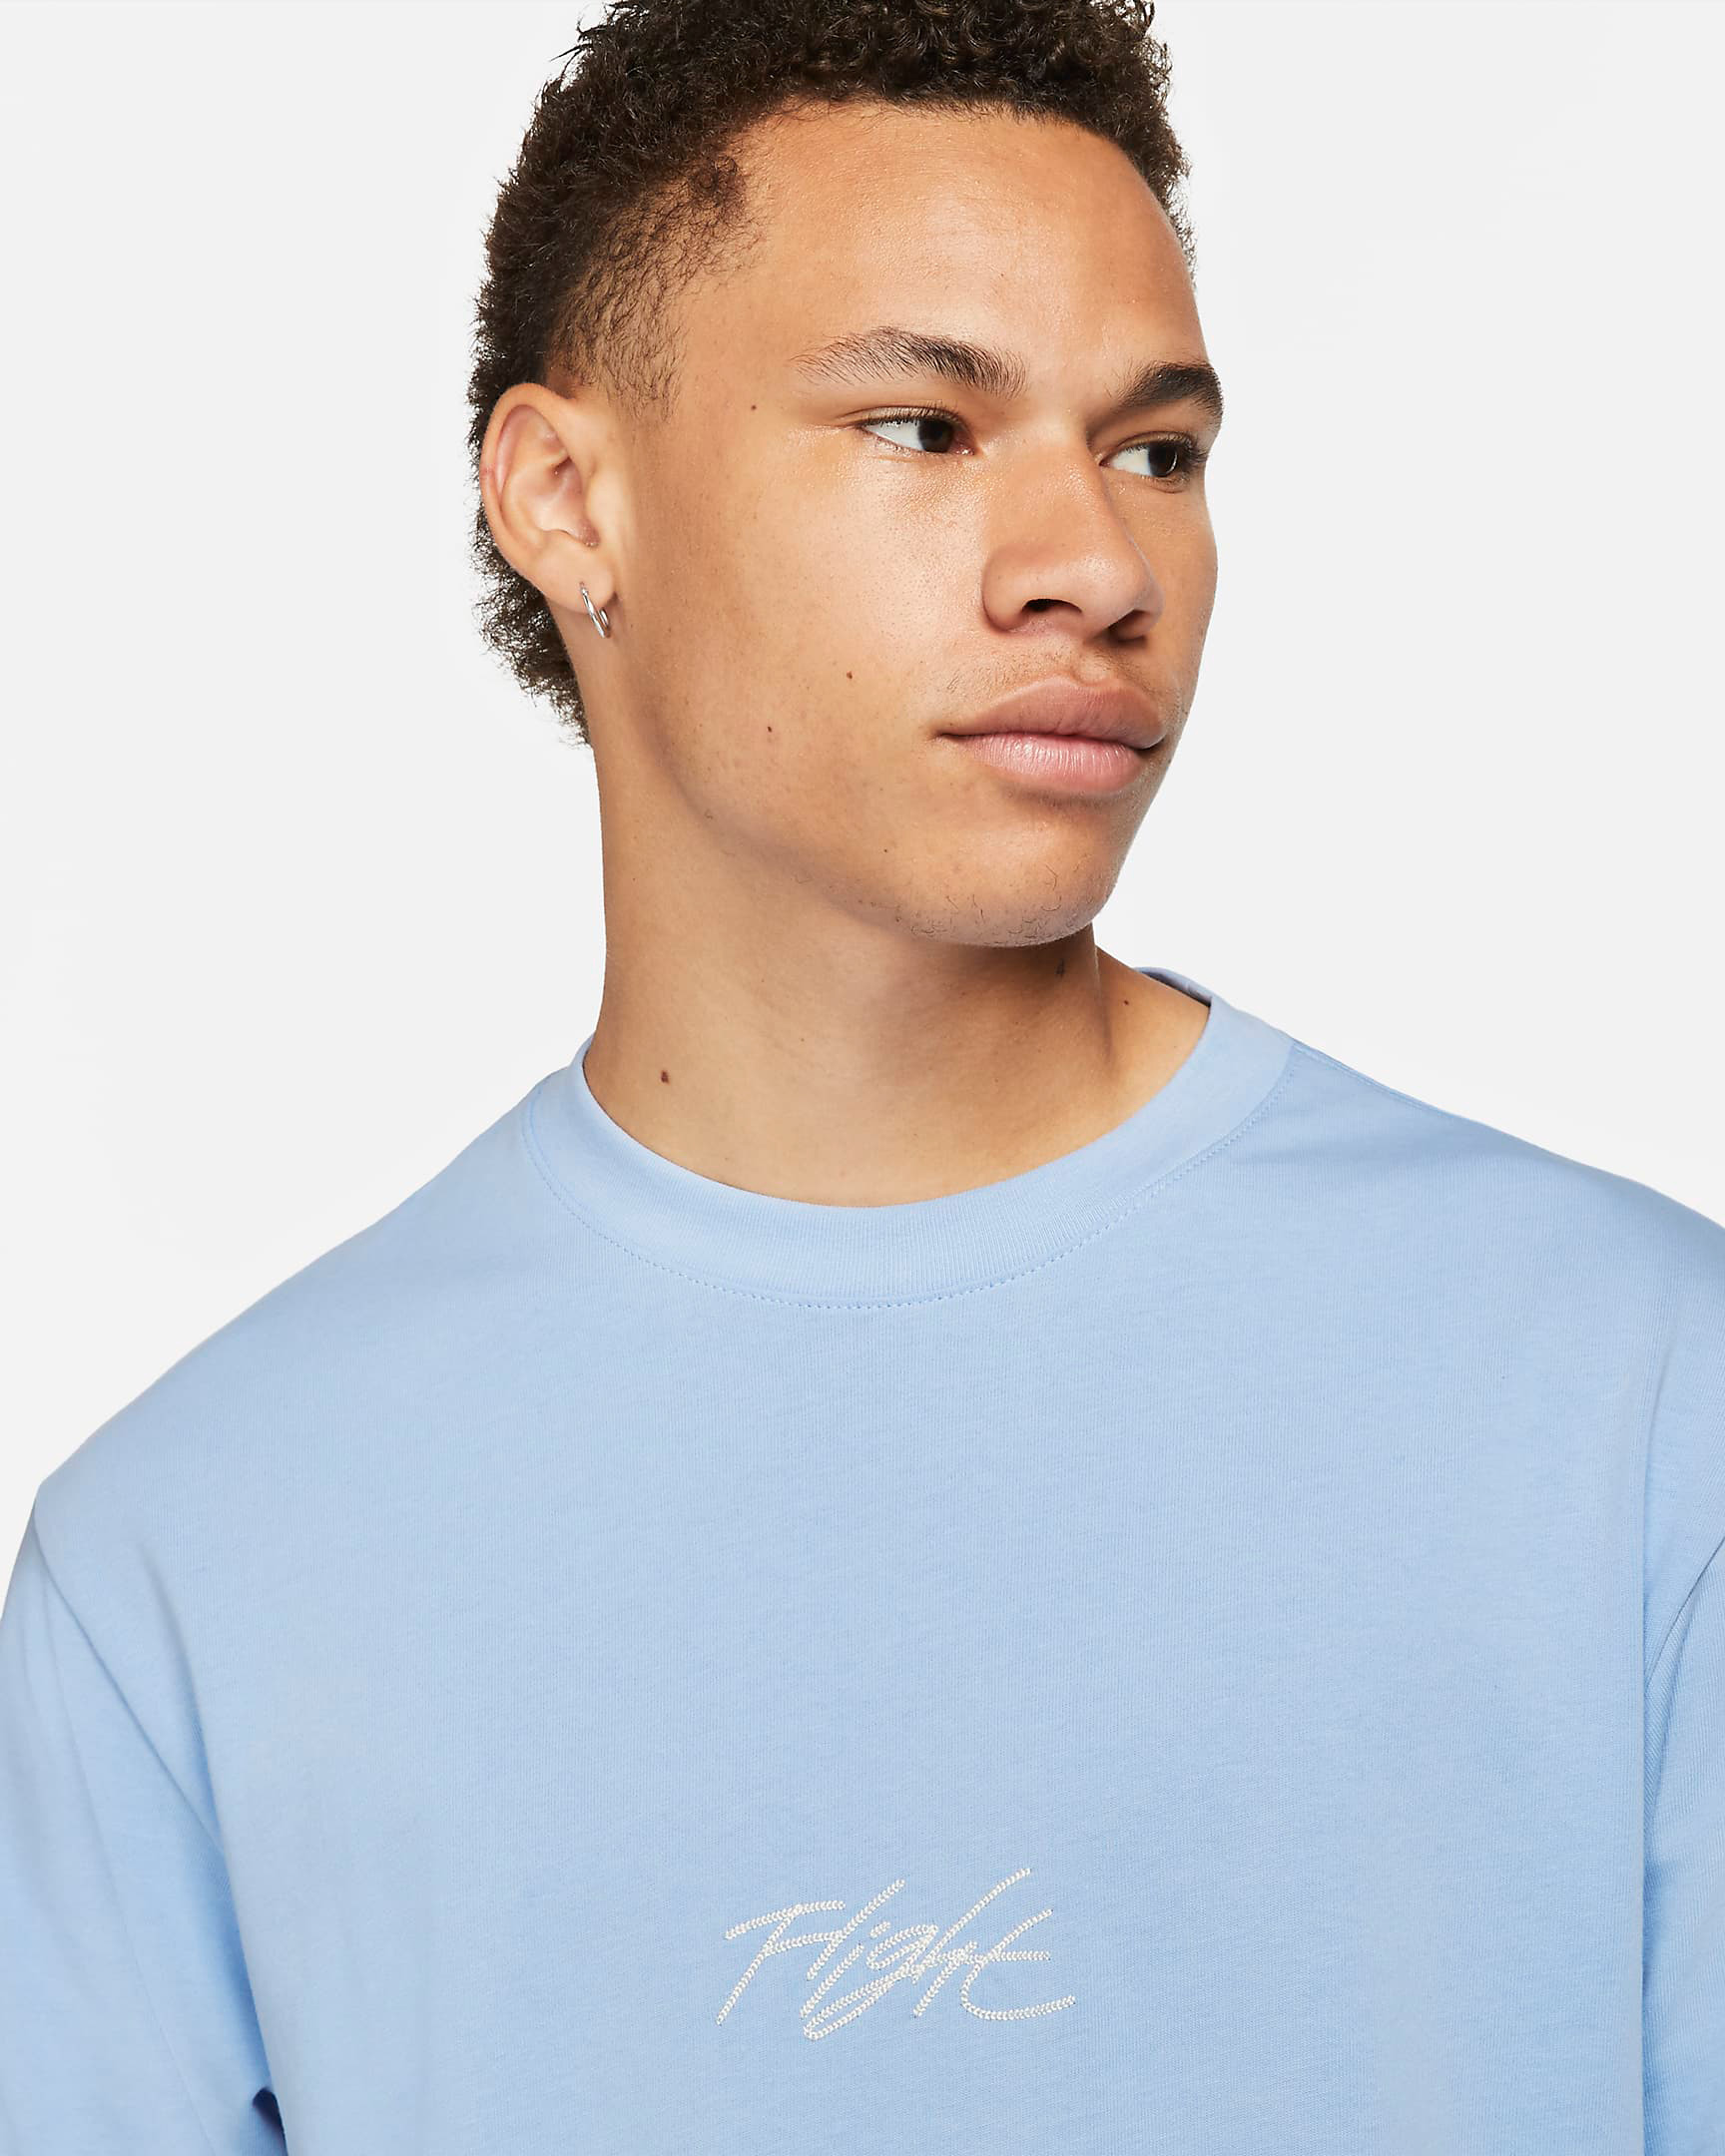 Air Jordan 5 Bluebird Shirts Clothing Outfits to Match